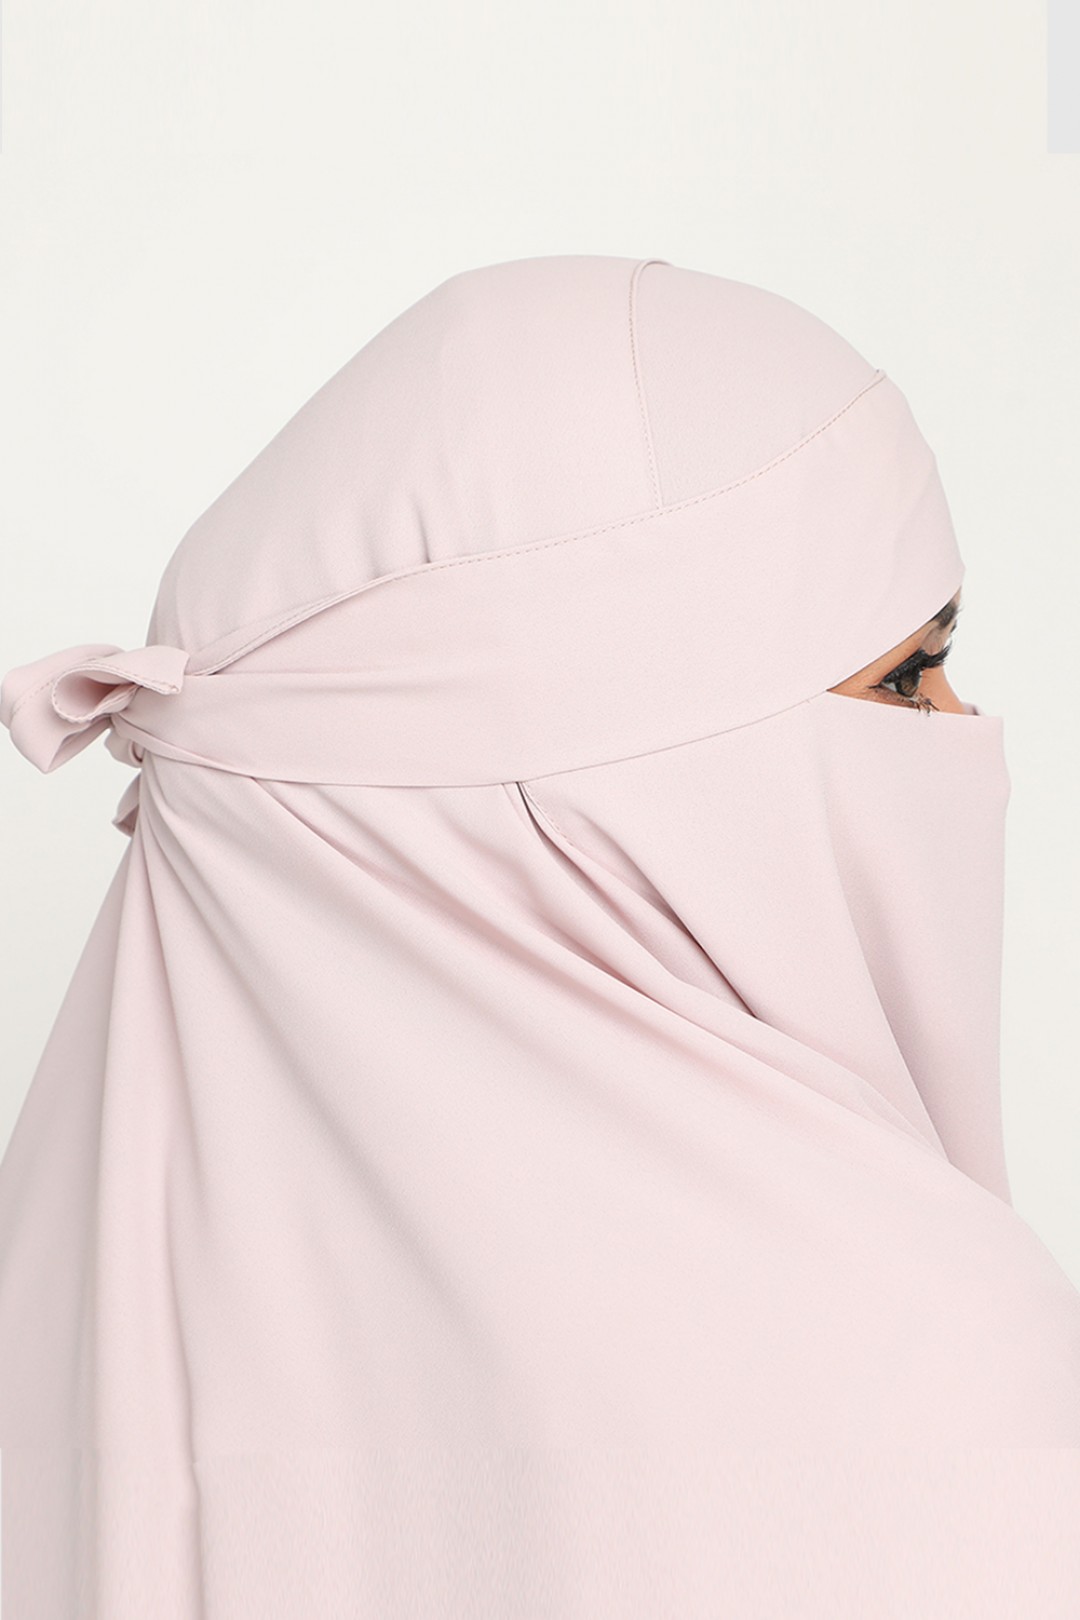 As-Is Niqab Milky White